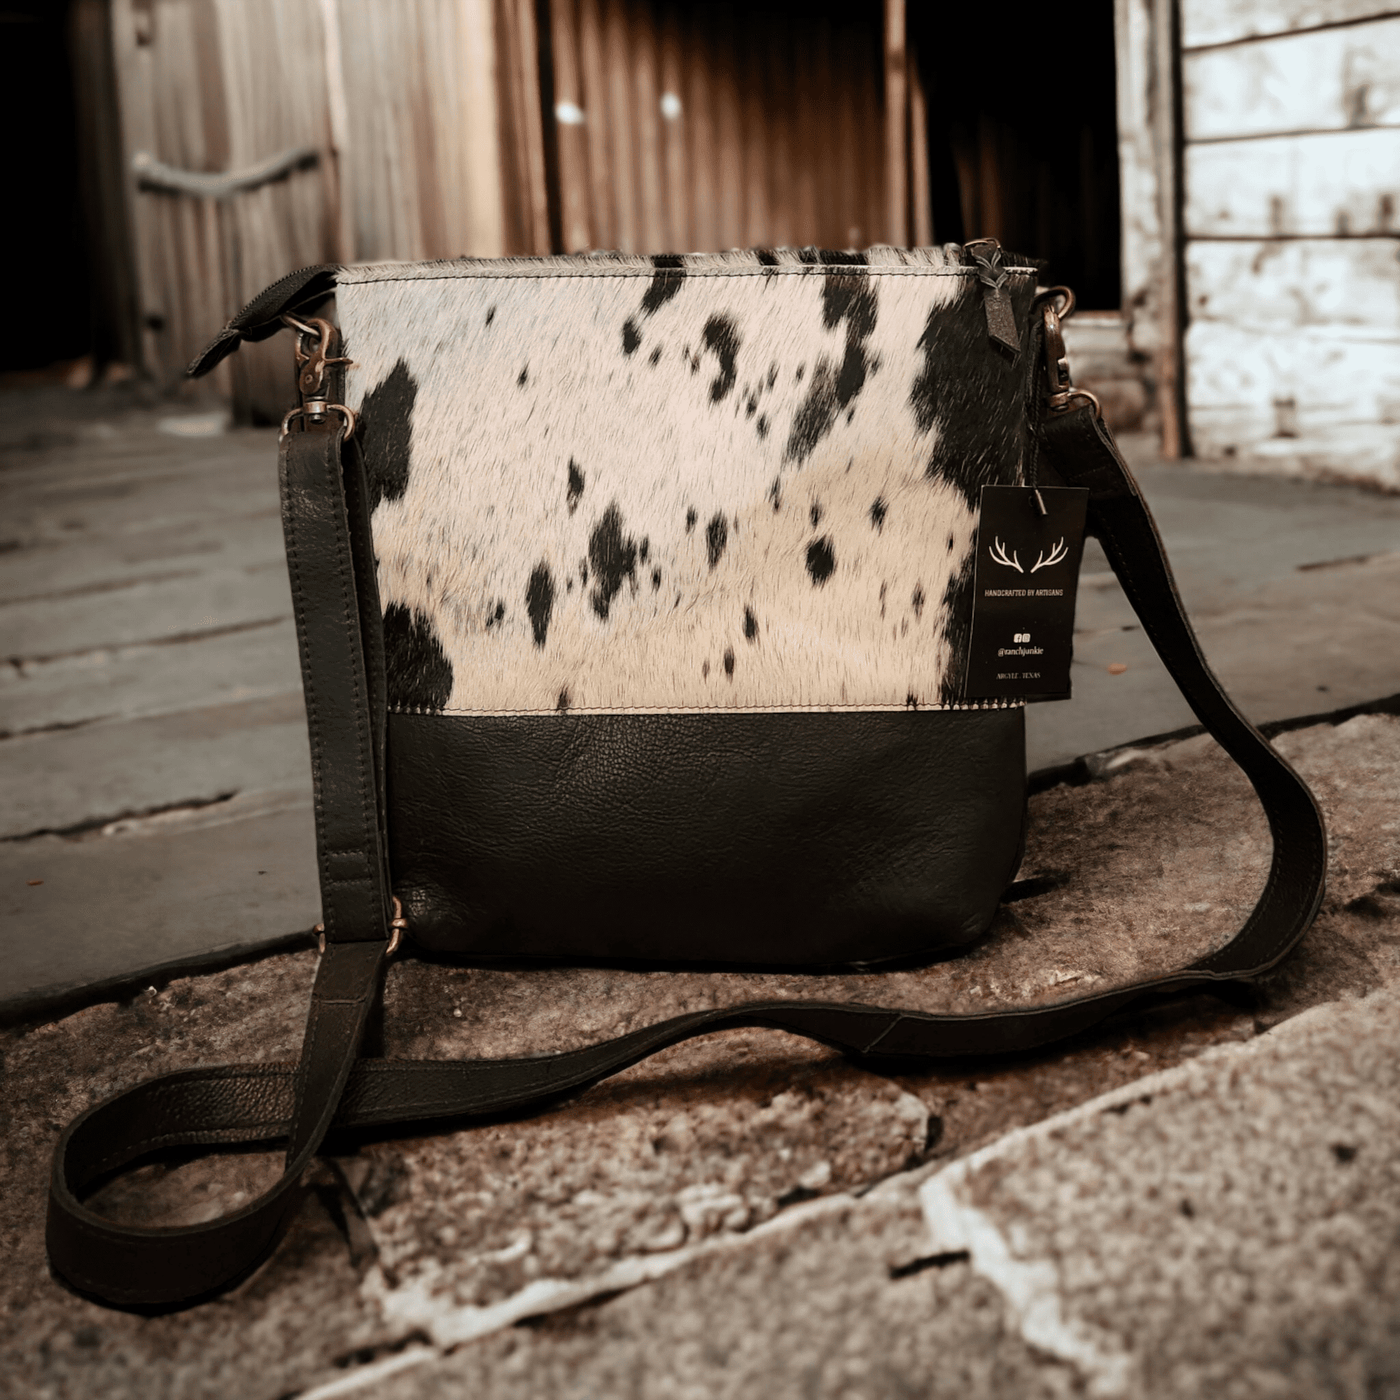 Cowhide Crossbody Purse Handbag Wallet Brown Cow Hide Leather Western Gifts